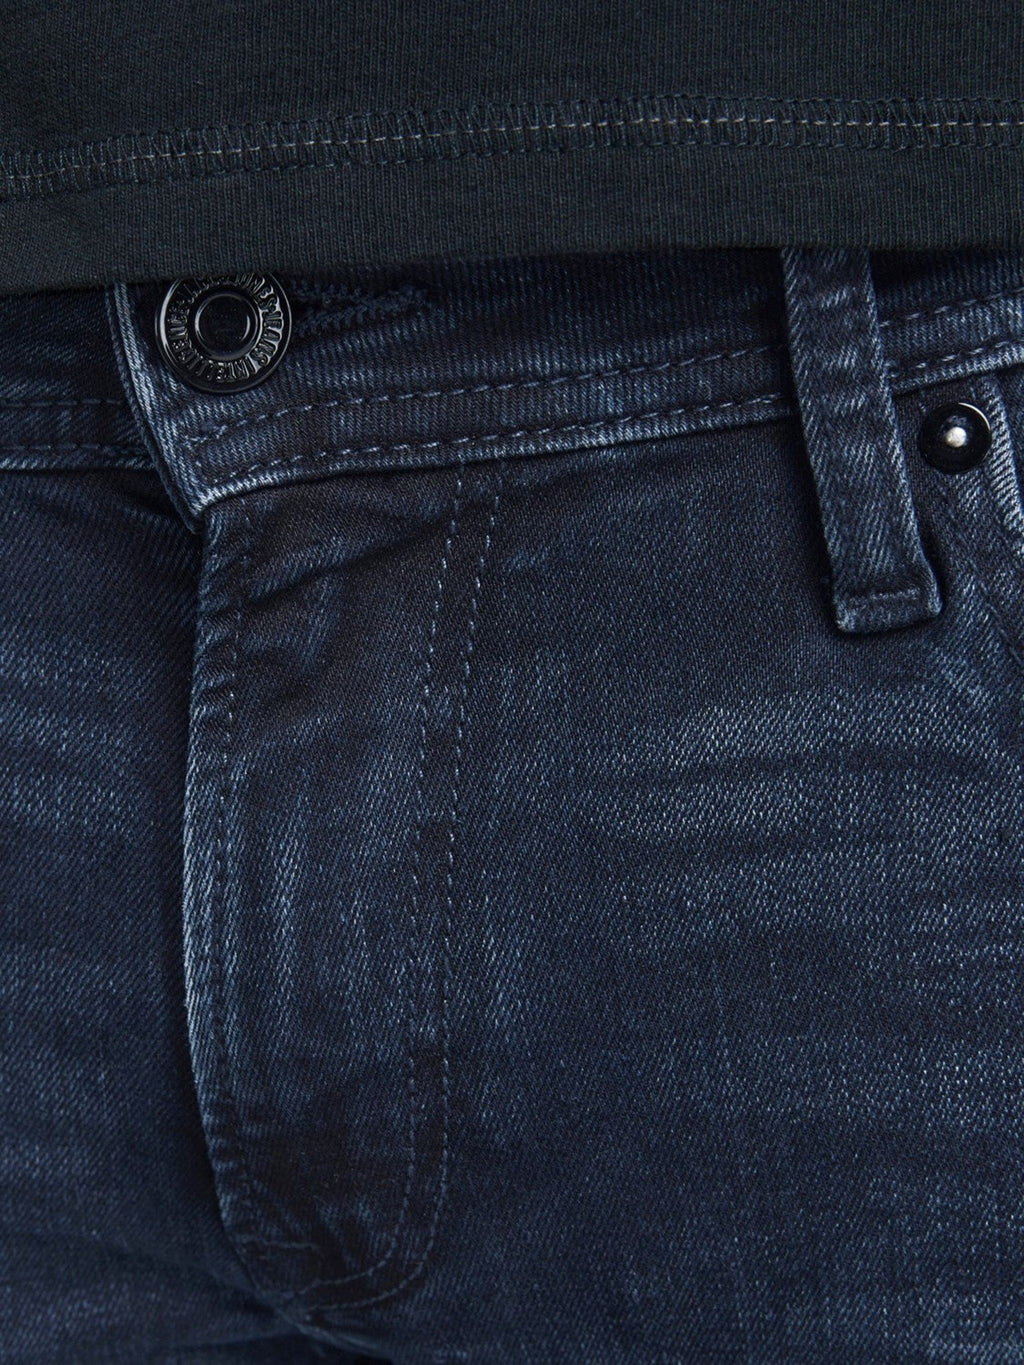 Liam Original Jeans 004 - Blå denim